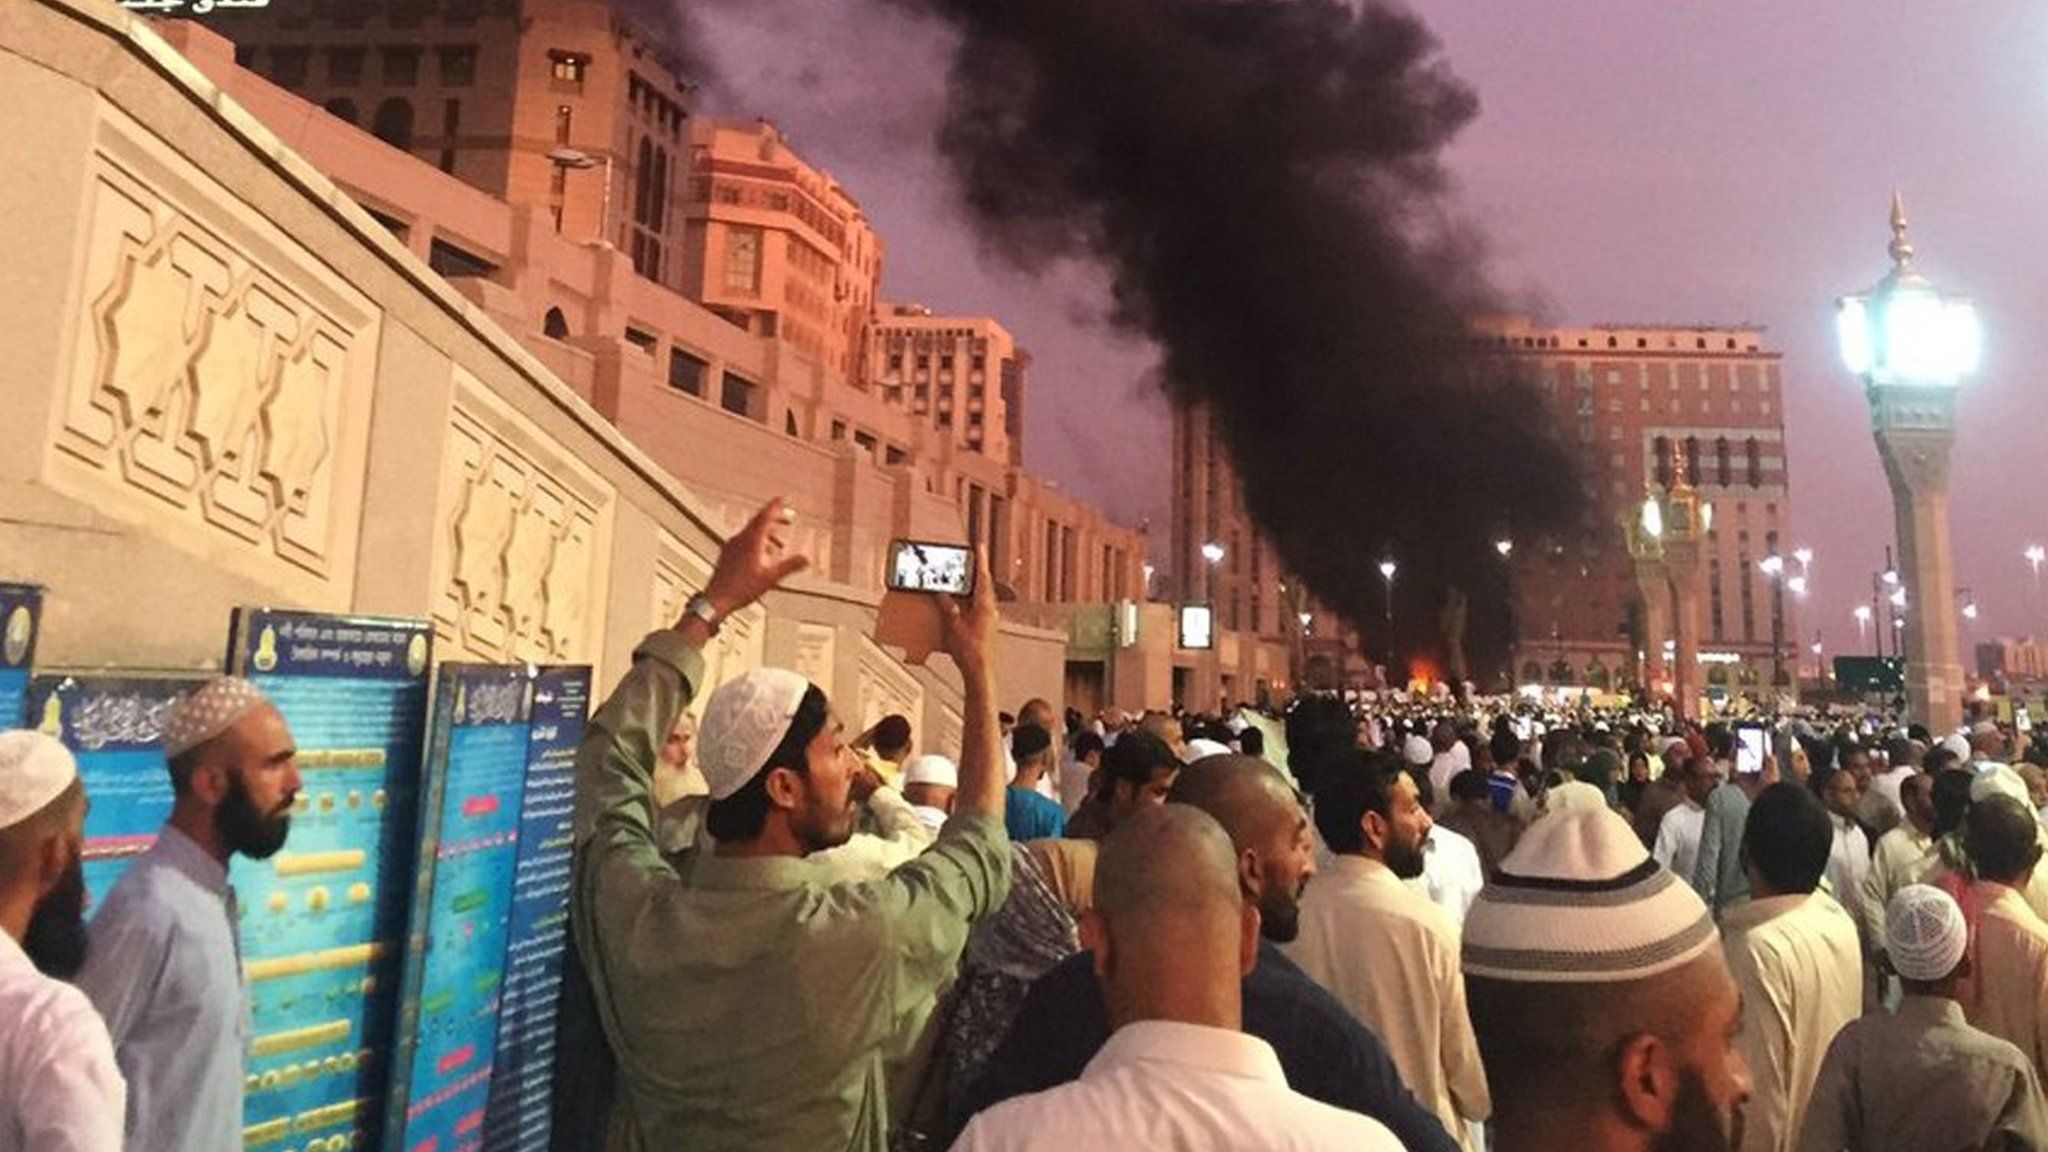 Crowd near scene of Medina explosion (04/07/16)